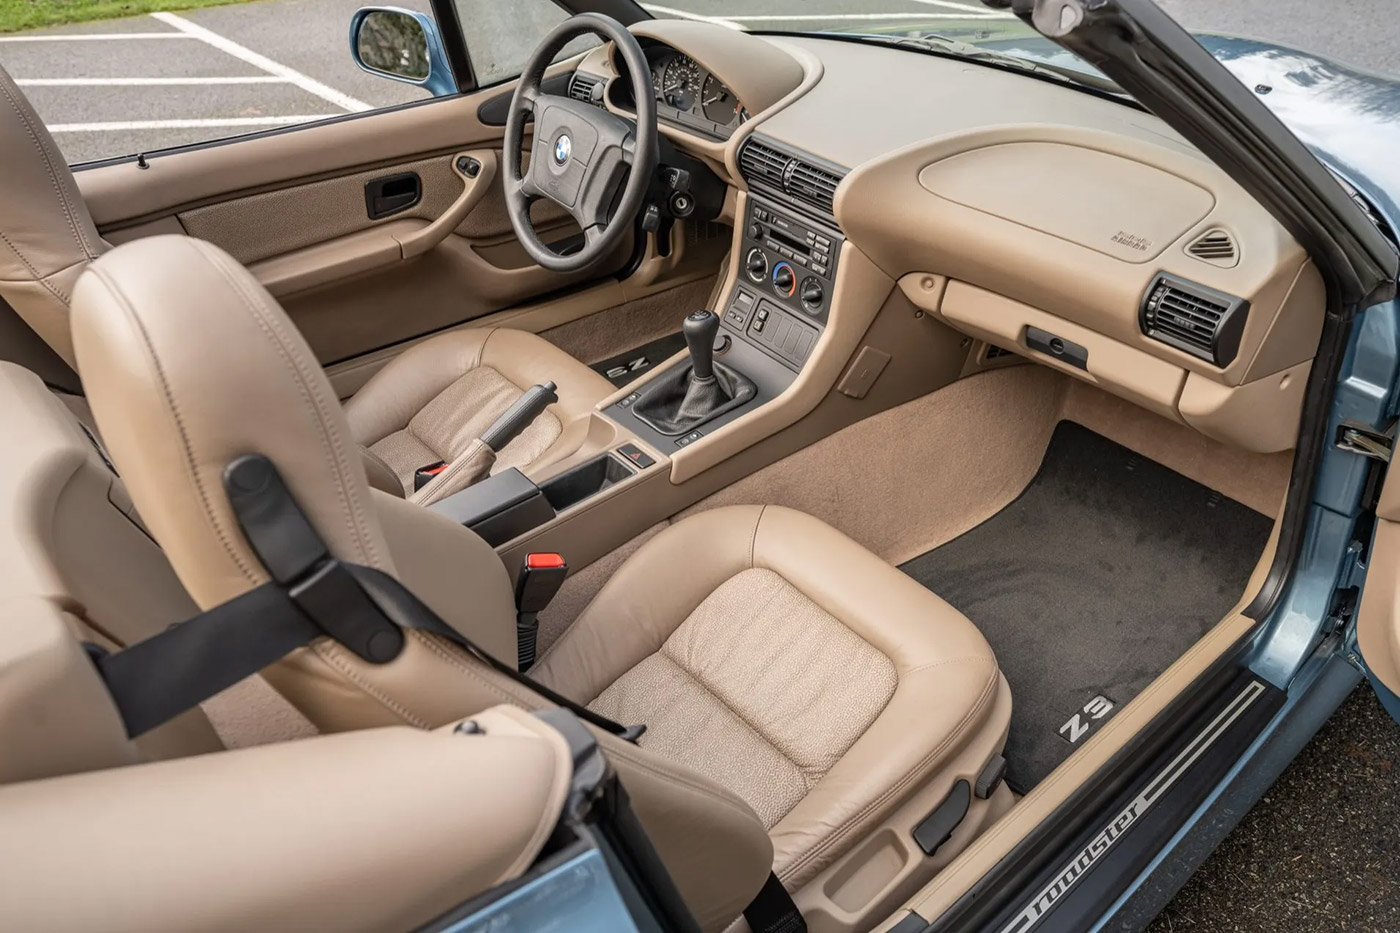 James Bond BMW Z3 For Sale Bring a Trailer beige interior